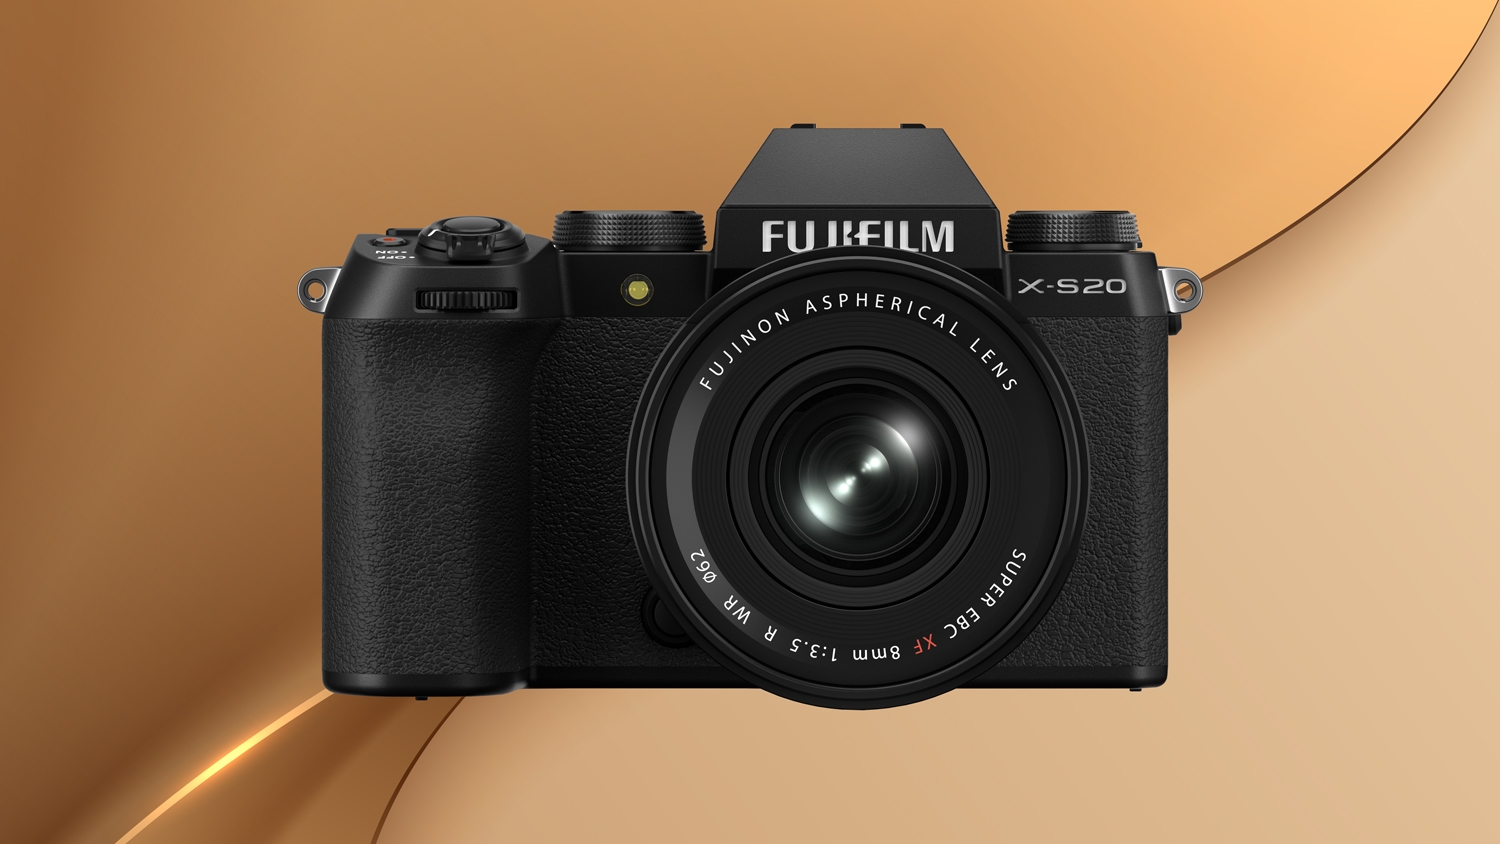 FUJIFILM Announces X-S20 Mirrorless Camera and XF 8mm f/3.5 R WR Lens